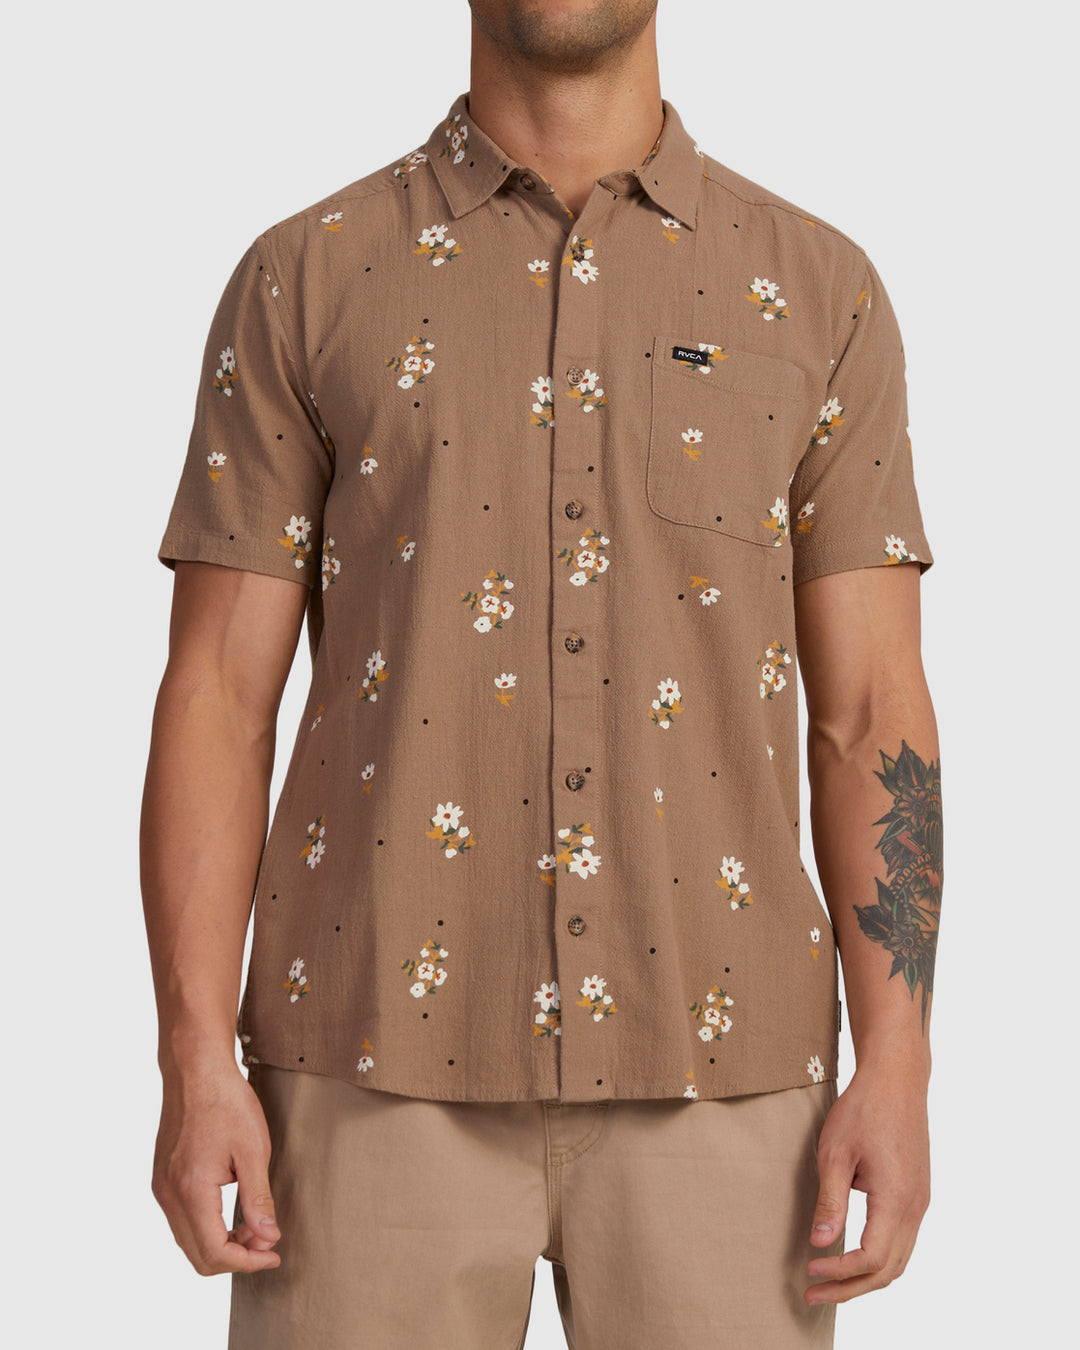 RVCA Happy Dayzie Short Sleeve Shirt - Timber - Sun Diego Boardshop